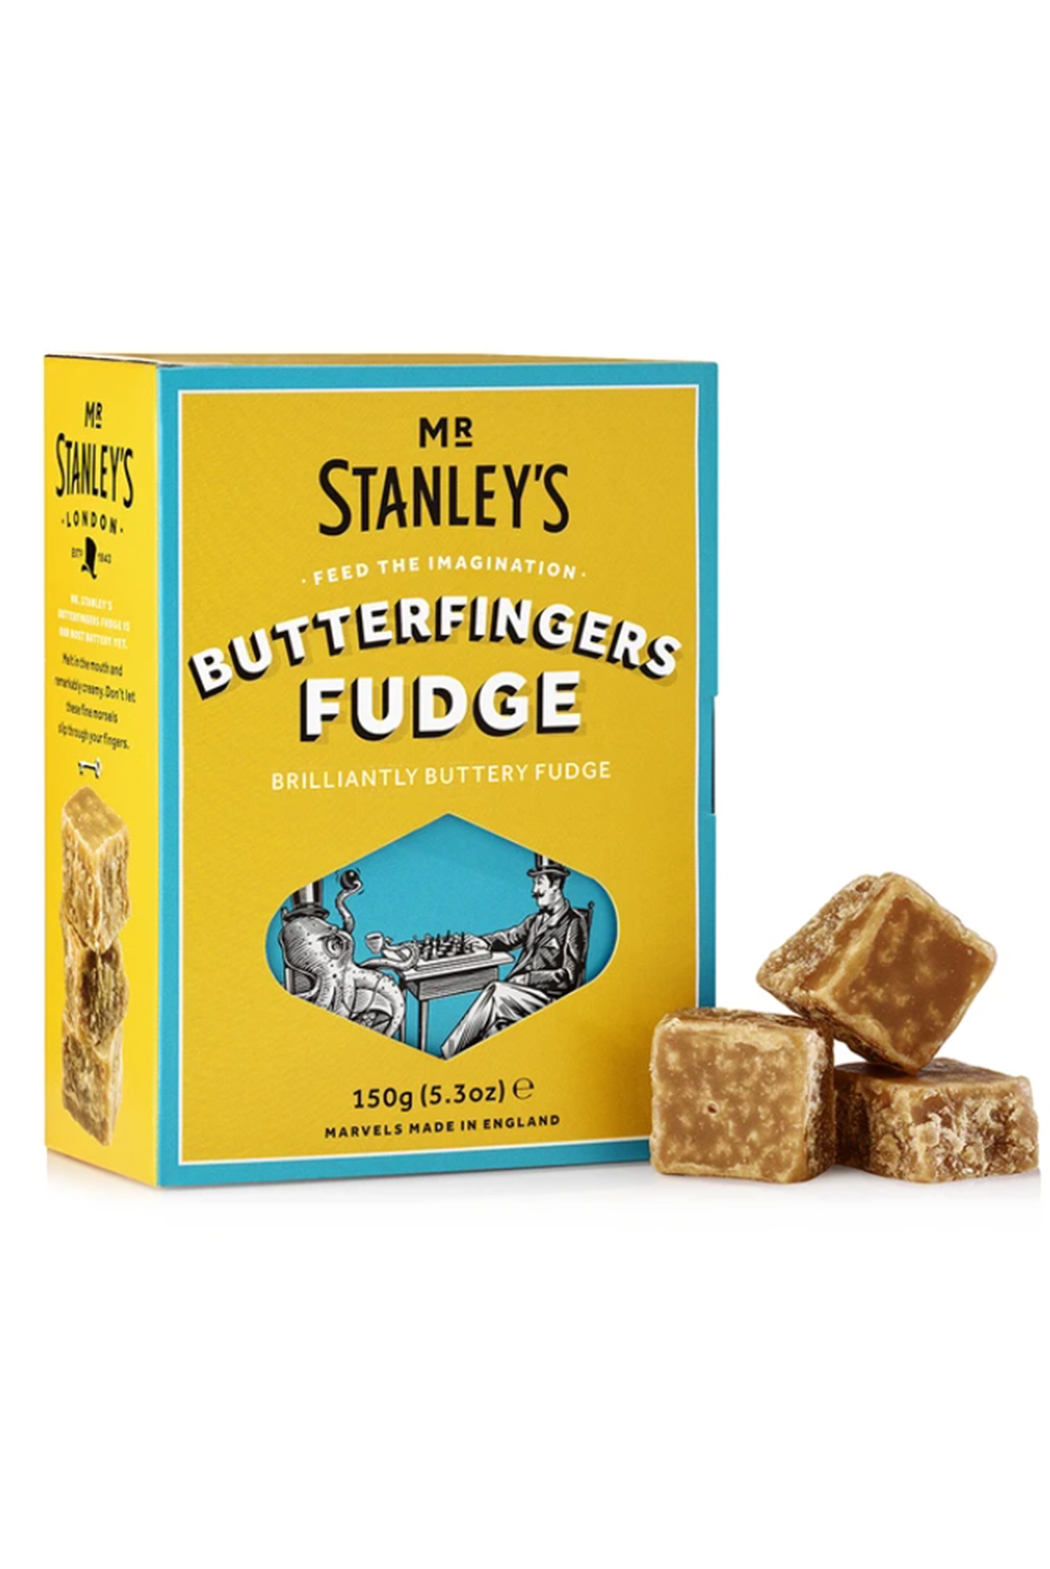 Mr Stanley's Butterfingers Fudge